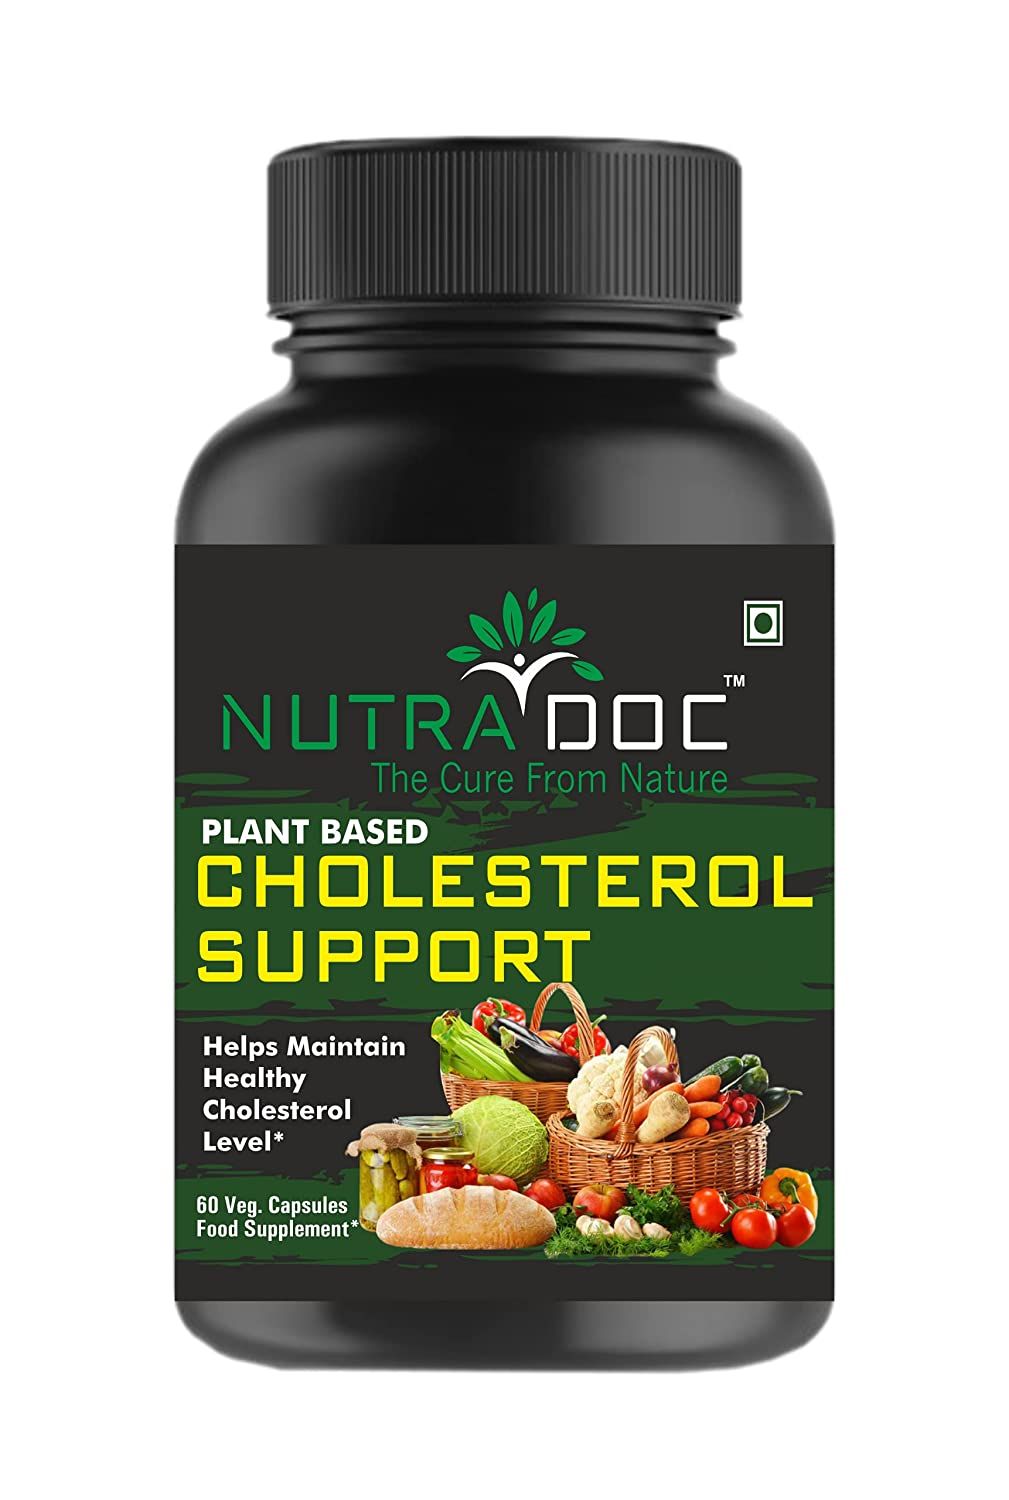 Nutradoc Plant Based Cholesterol Support Image